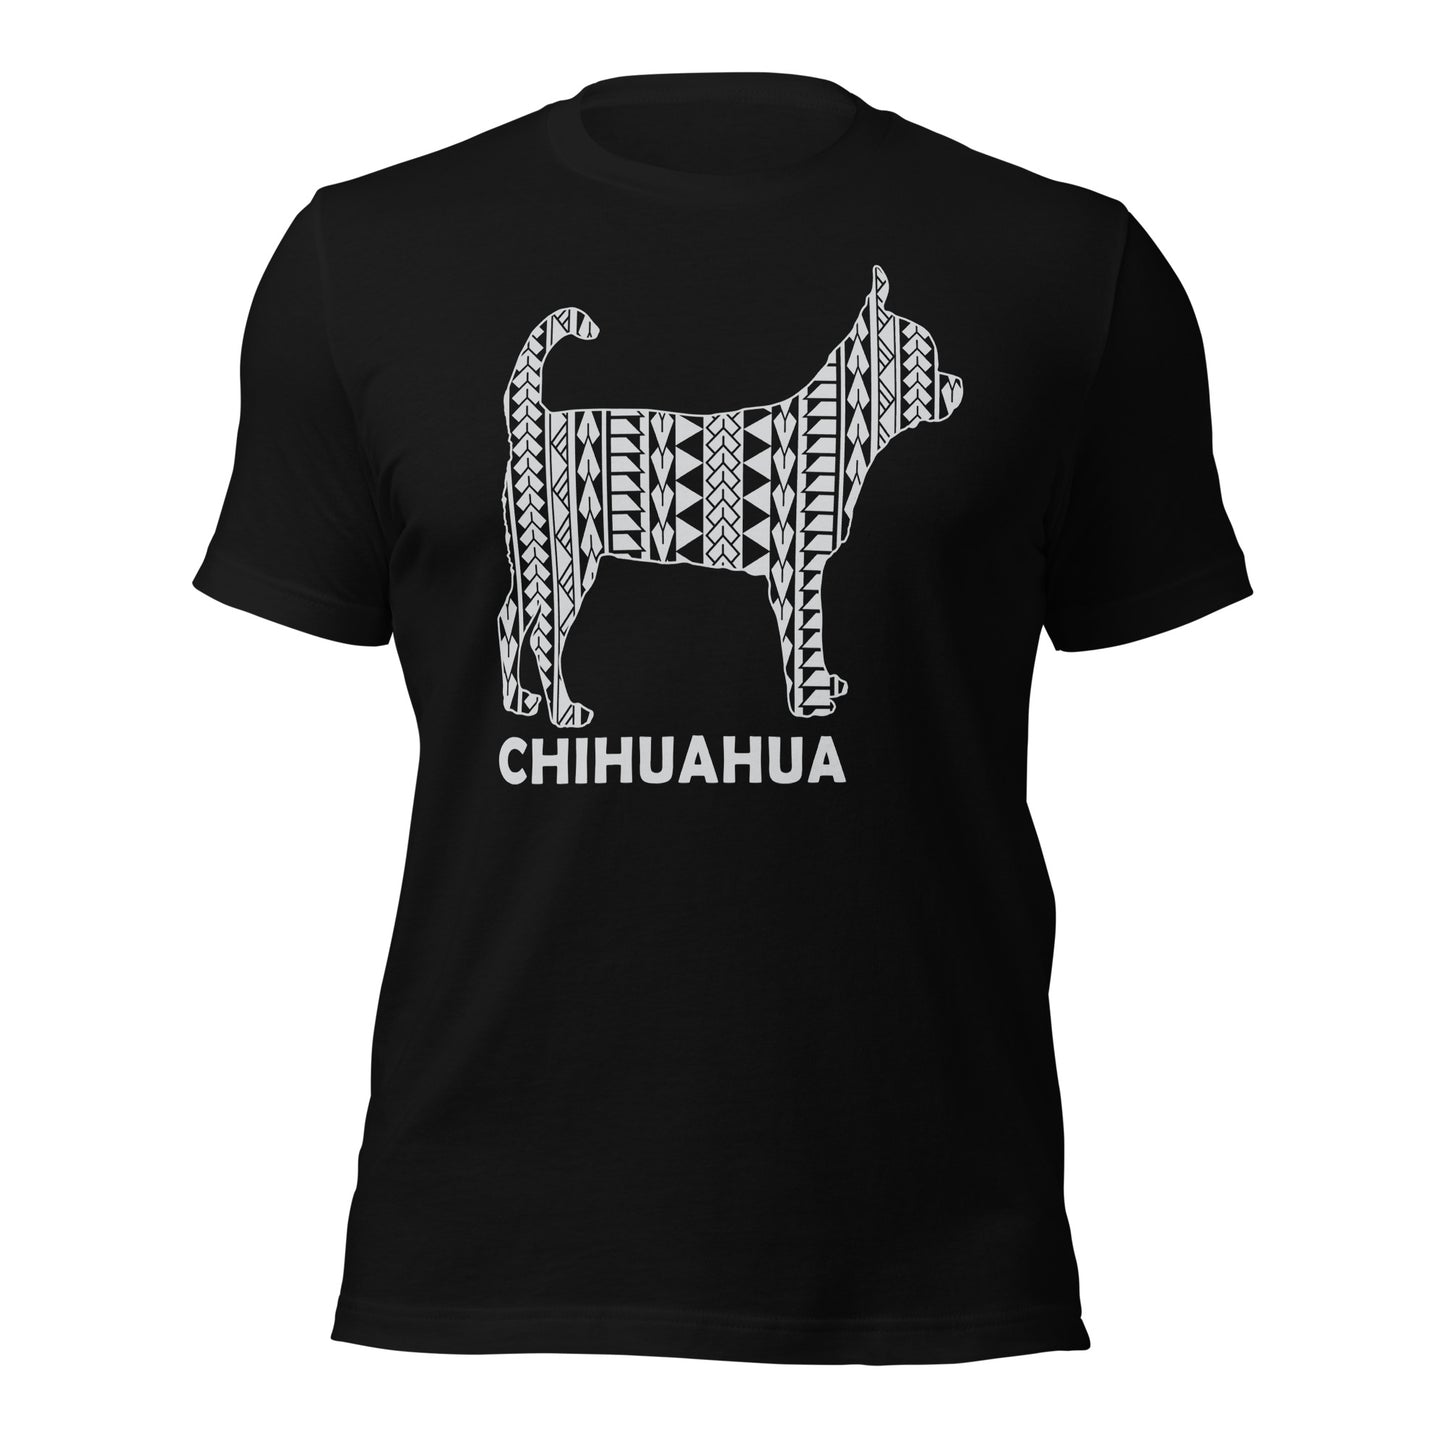 Chihuahua Polynesian t-shirt black by Dog Artistry.